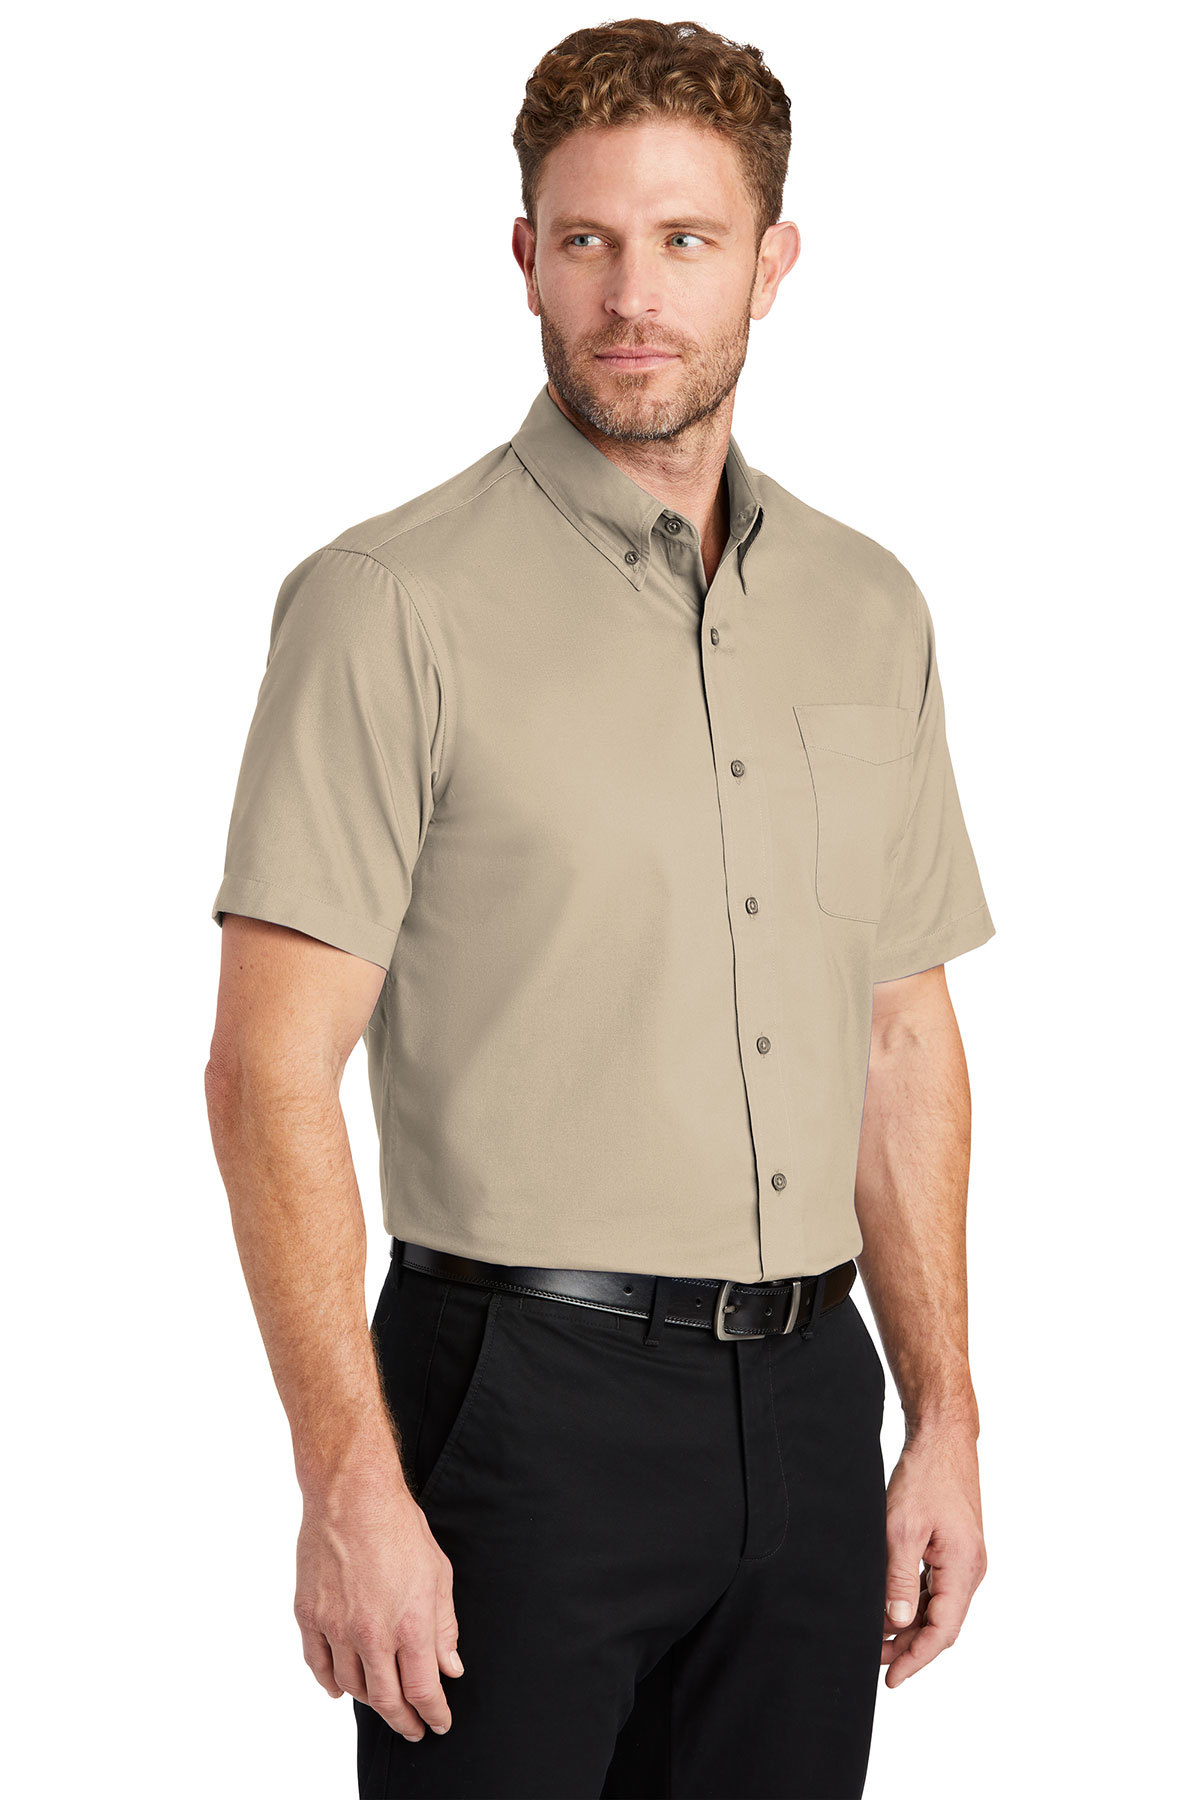 CornerStone - Short Sleeve SuperPro ™ Twill Shirt | Product | Company ...